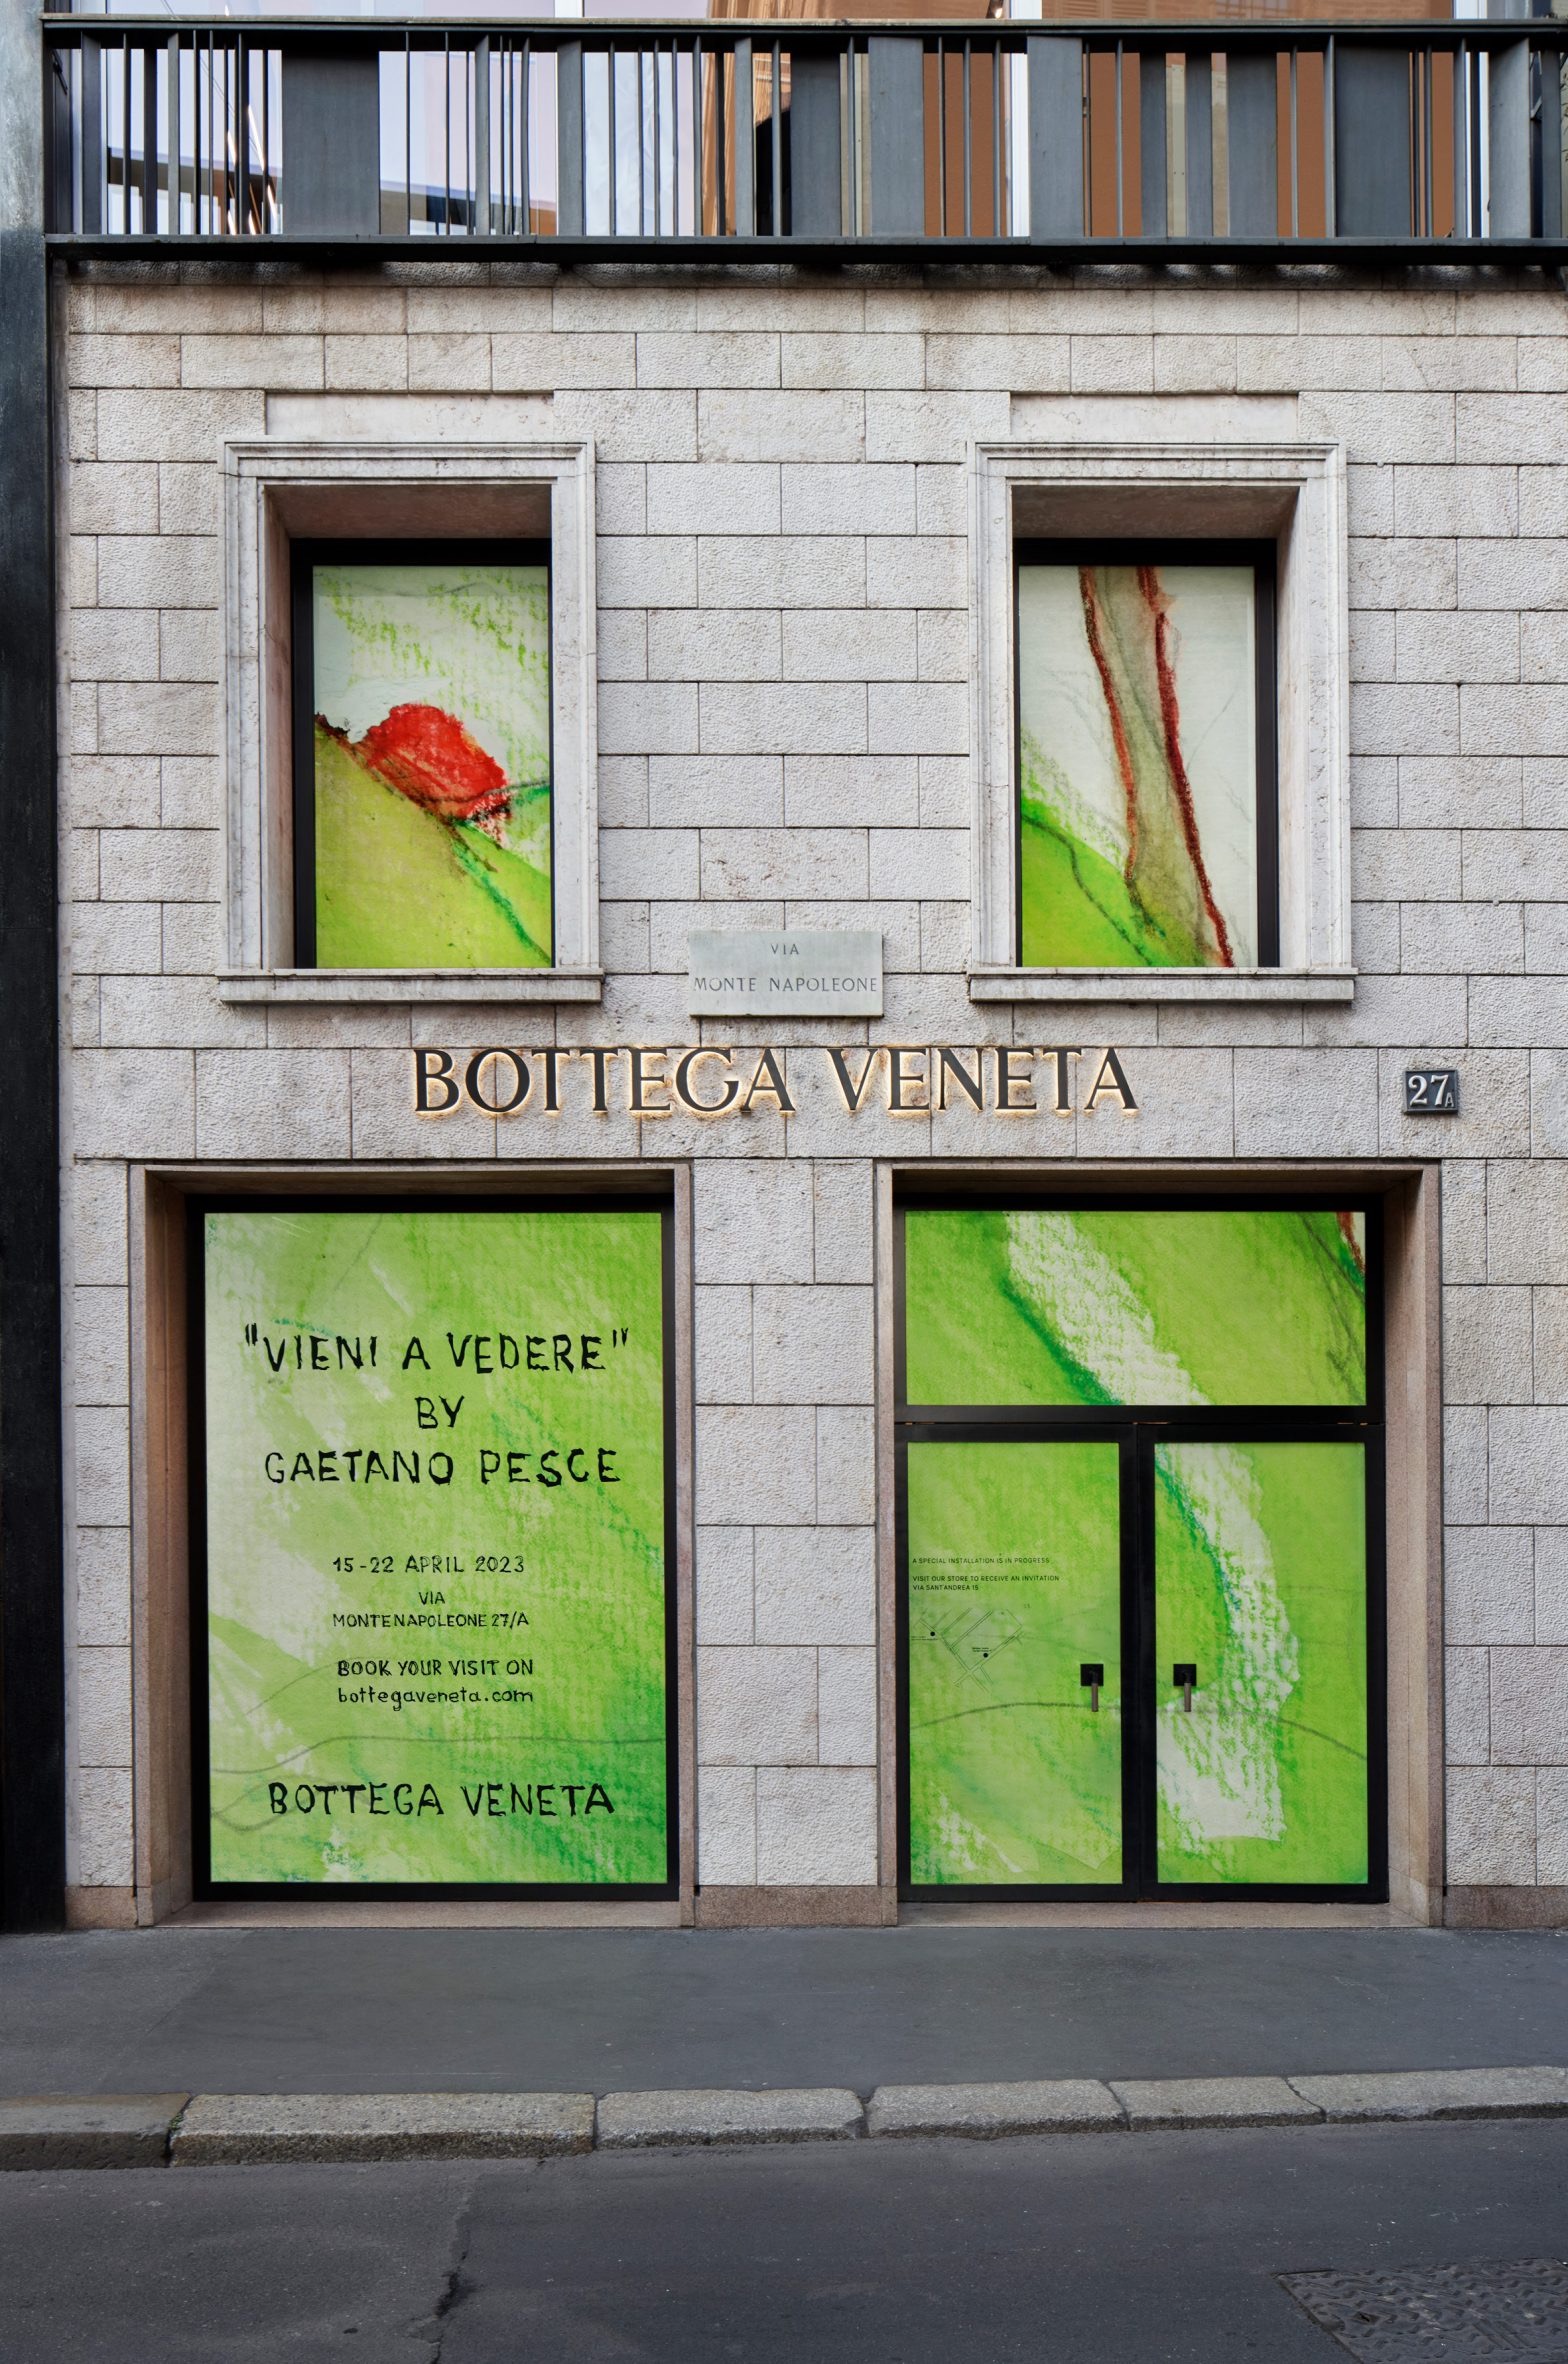 Bottega Veneta Montenapoleone store Vieni a Vedere (Come and See) Milan Design Week 2023